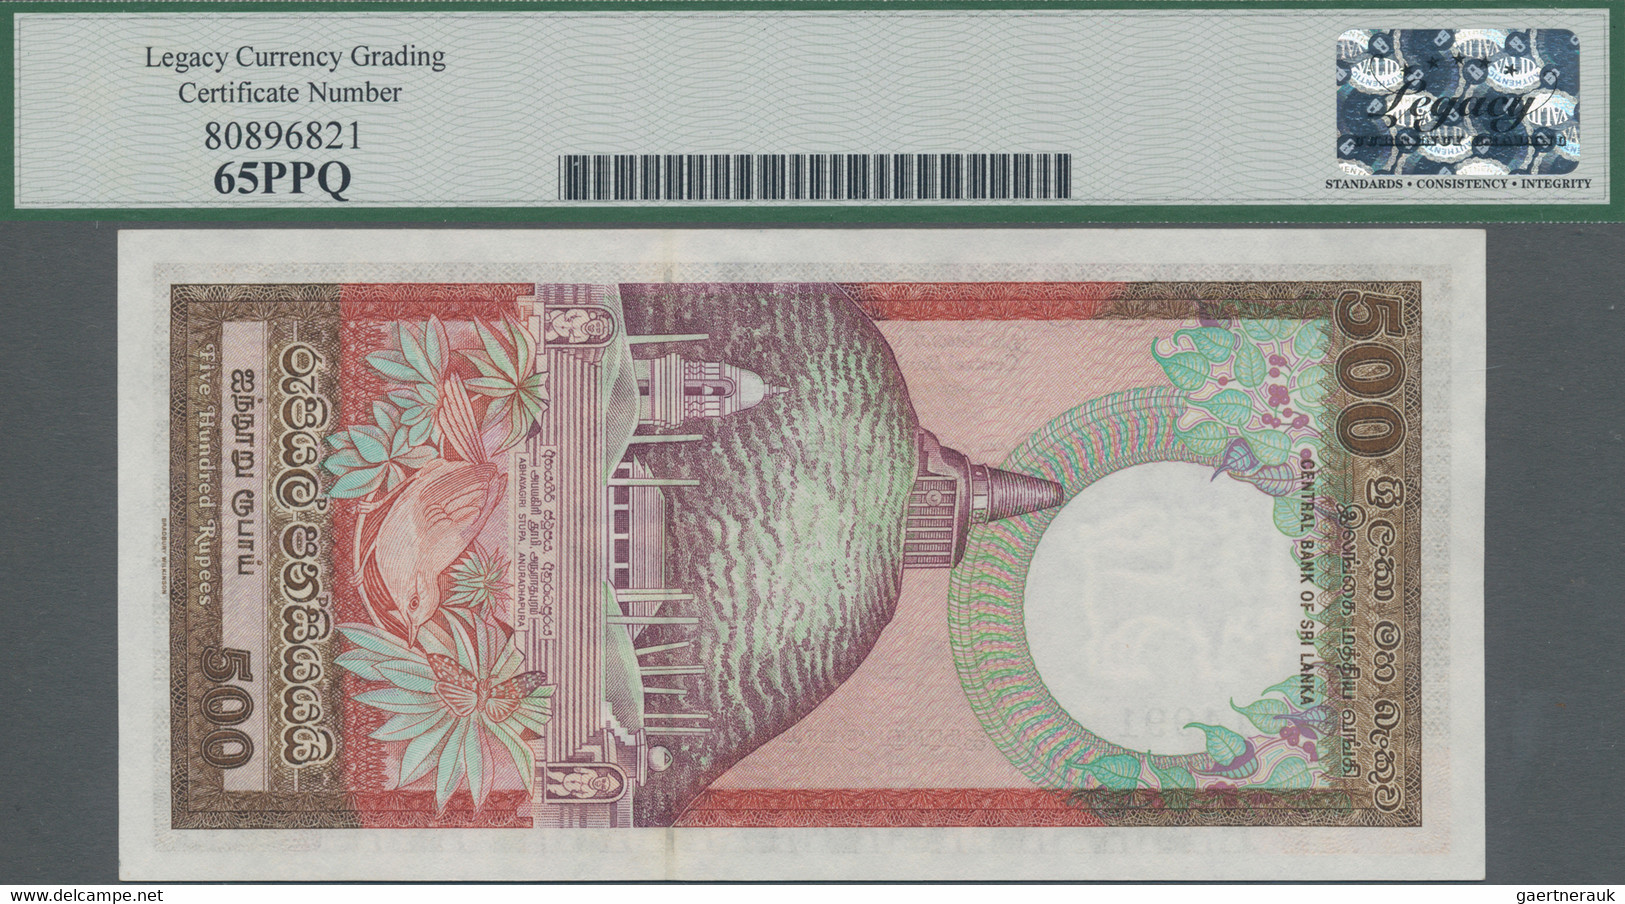 Sri Lanka: Central Bank Of Sri Lanka 500 Rupees 01.01.1987, P.100a, LCG Graded 6 - Sri Lanka